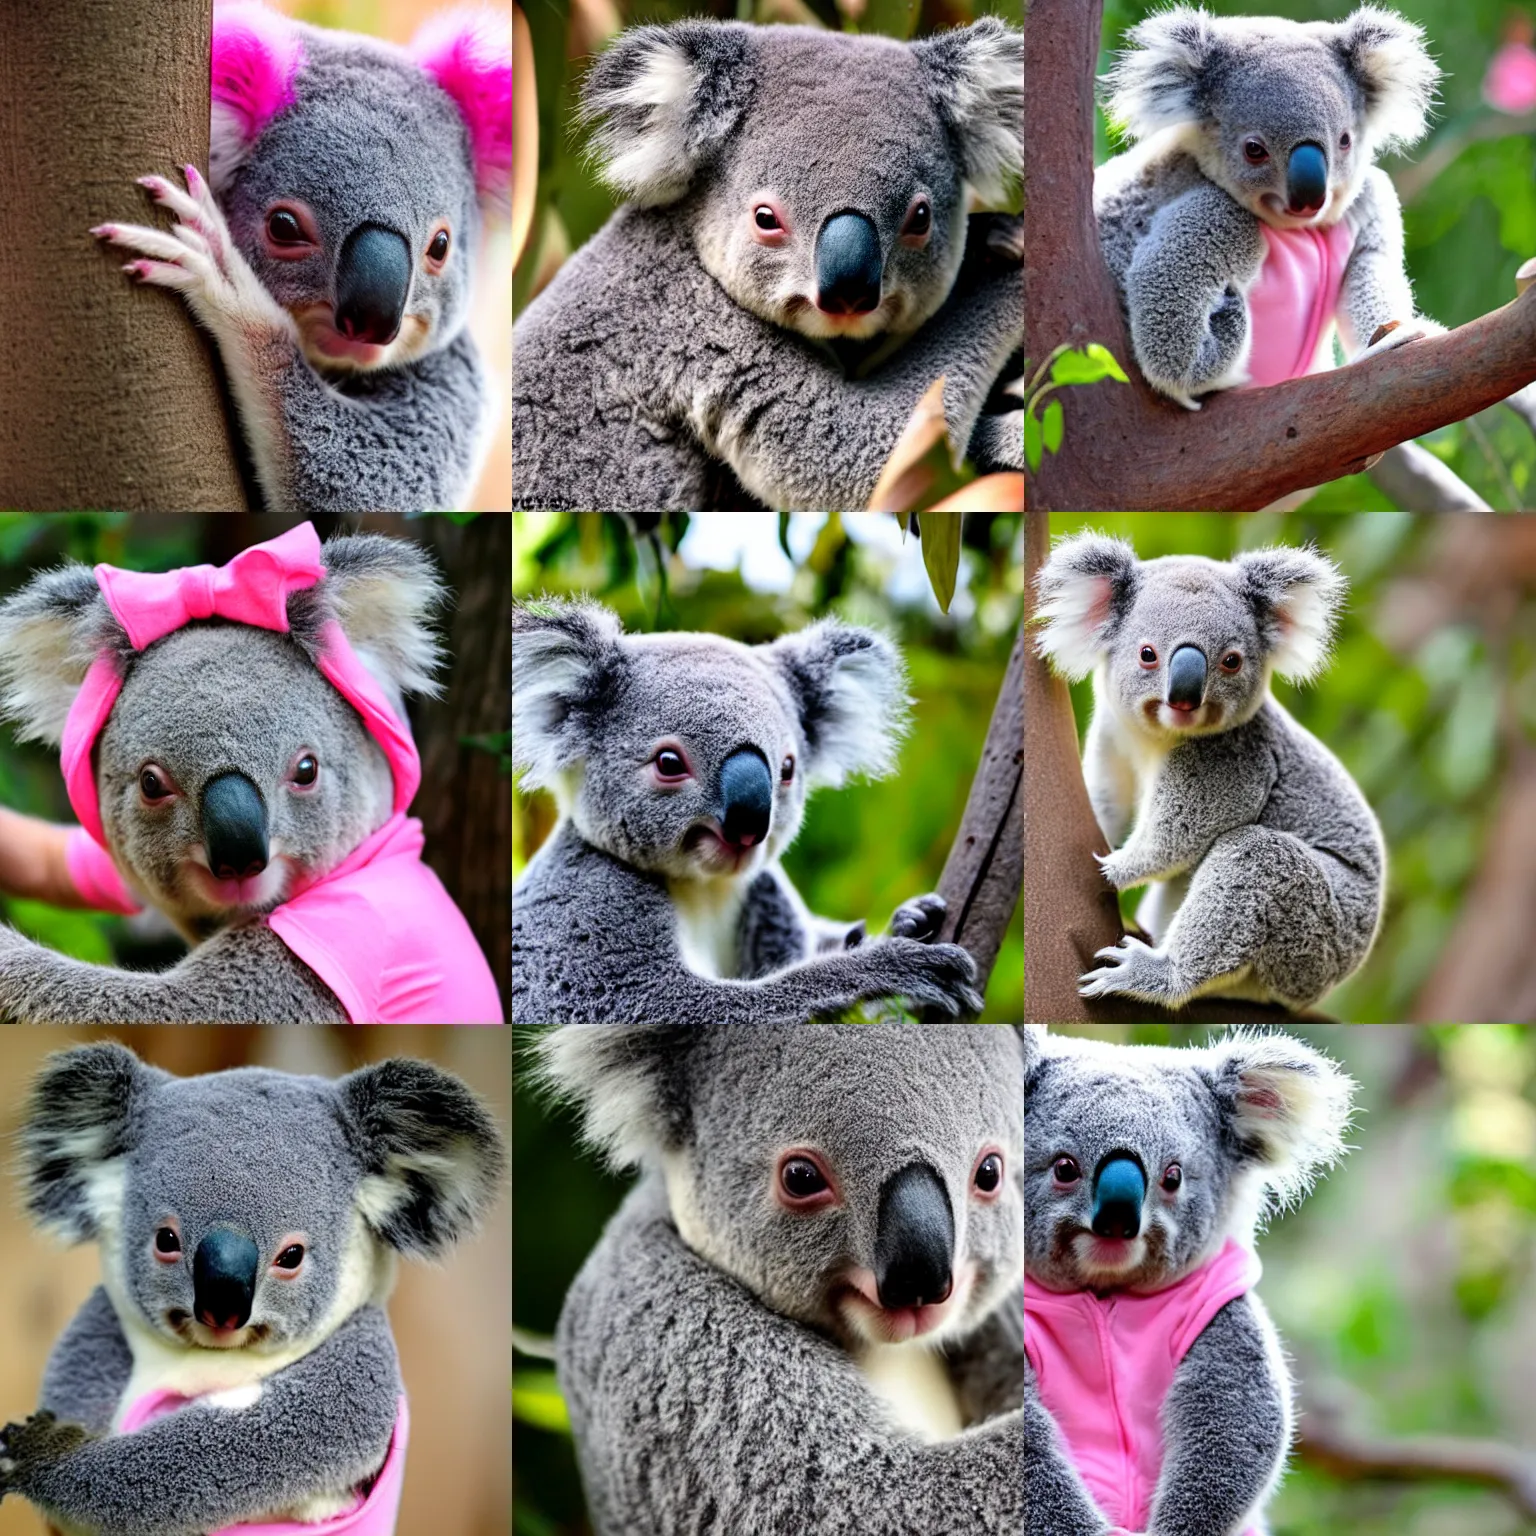 Prompt: a photograph of a koala baby wearing a pink koala onesie.